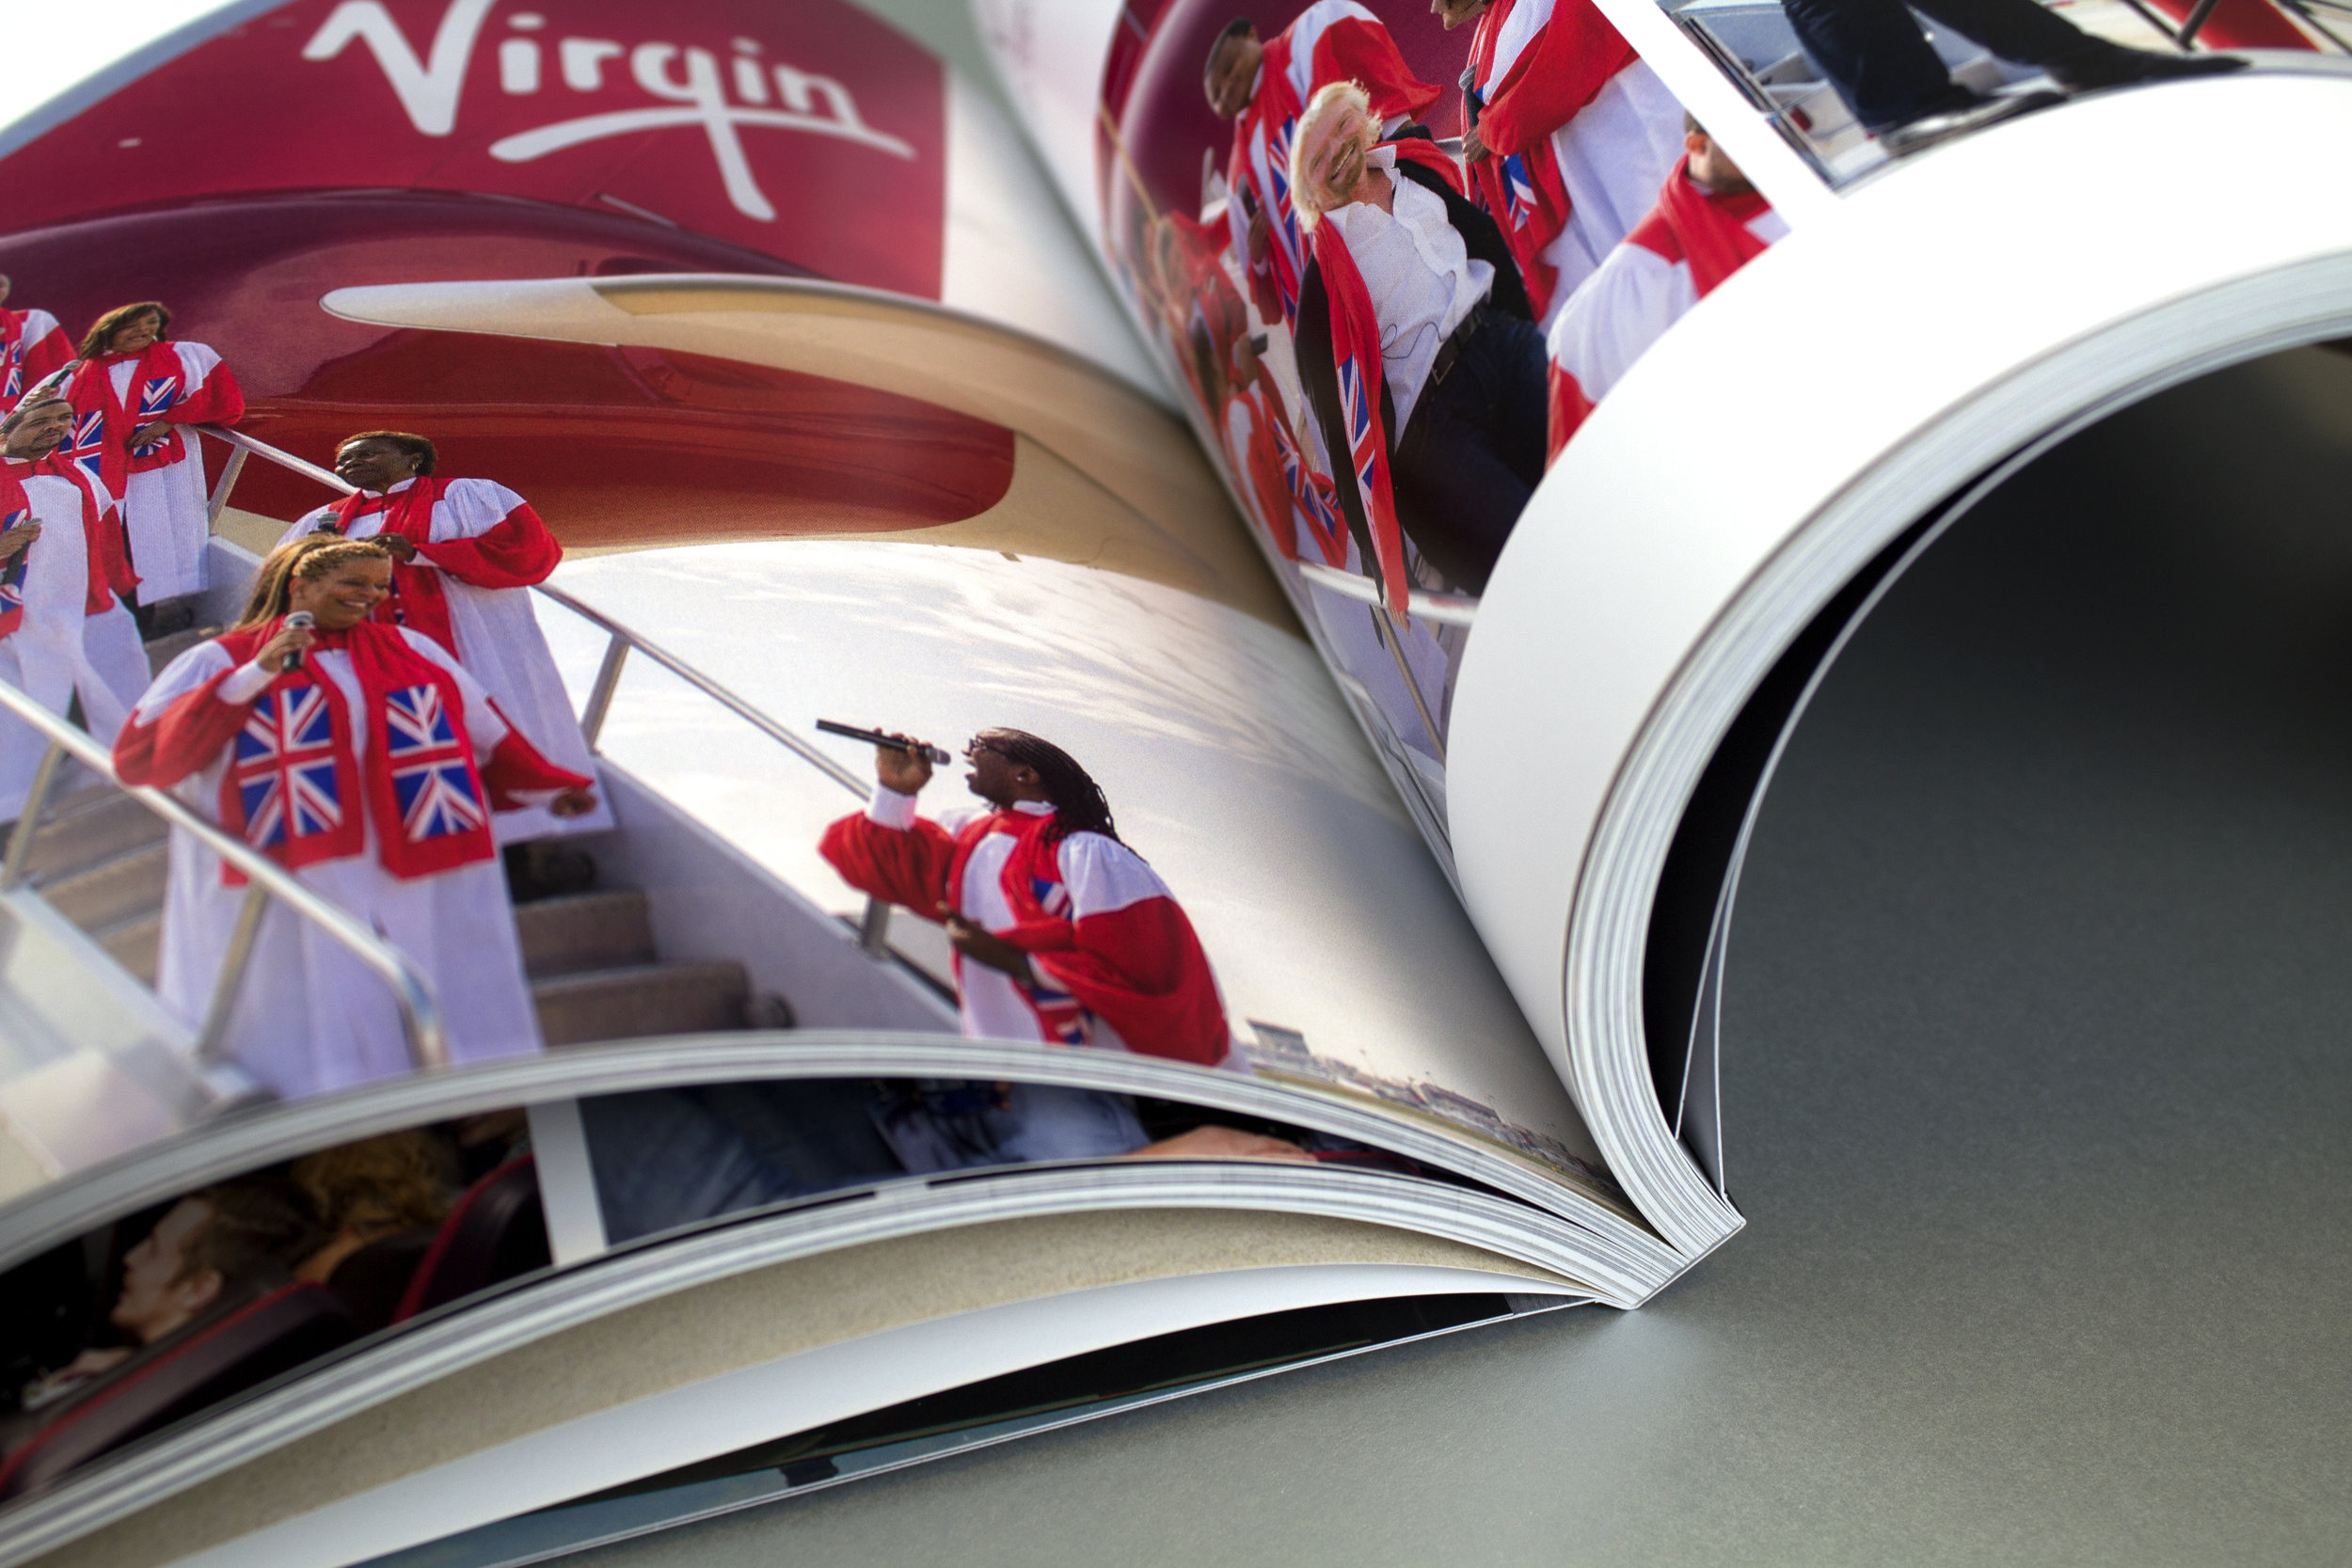 134027 - Virgin Atlantic - Photo Book-26.jpg